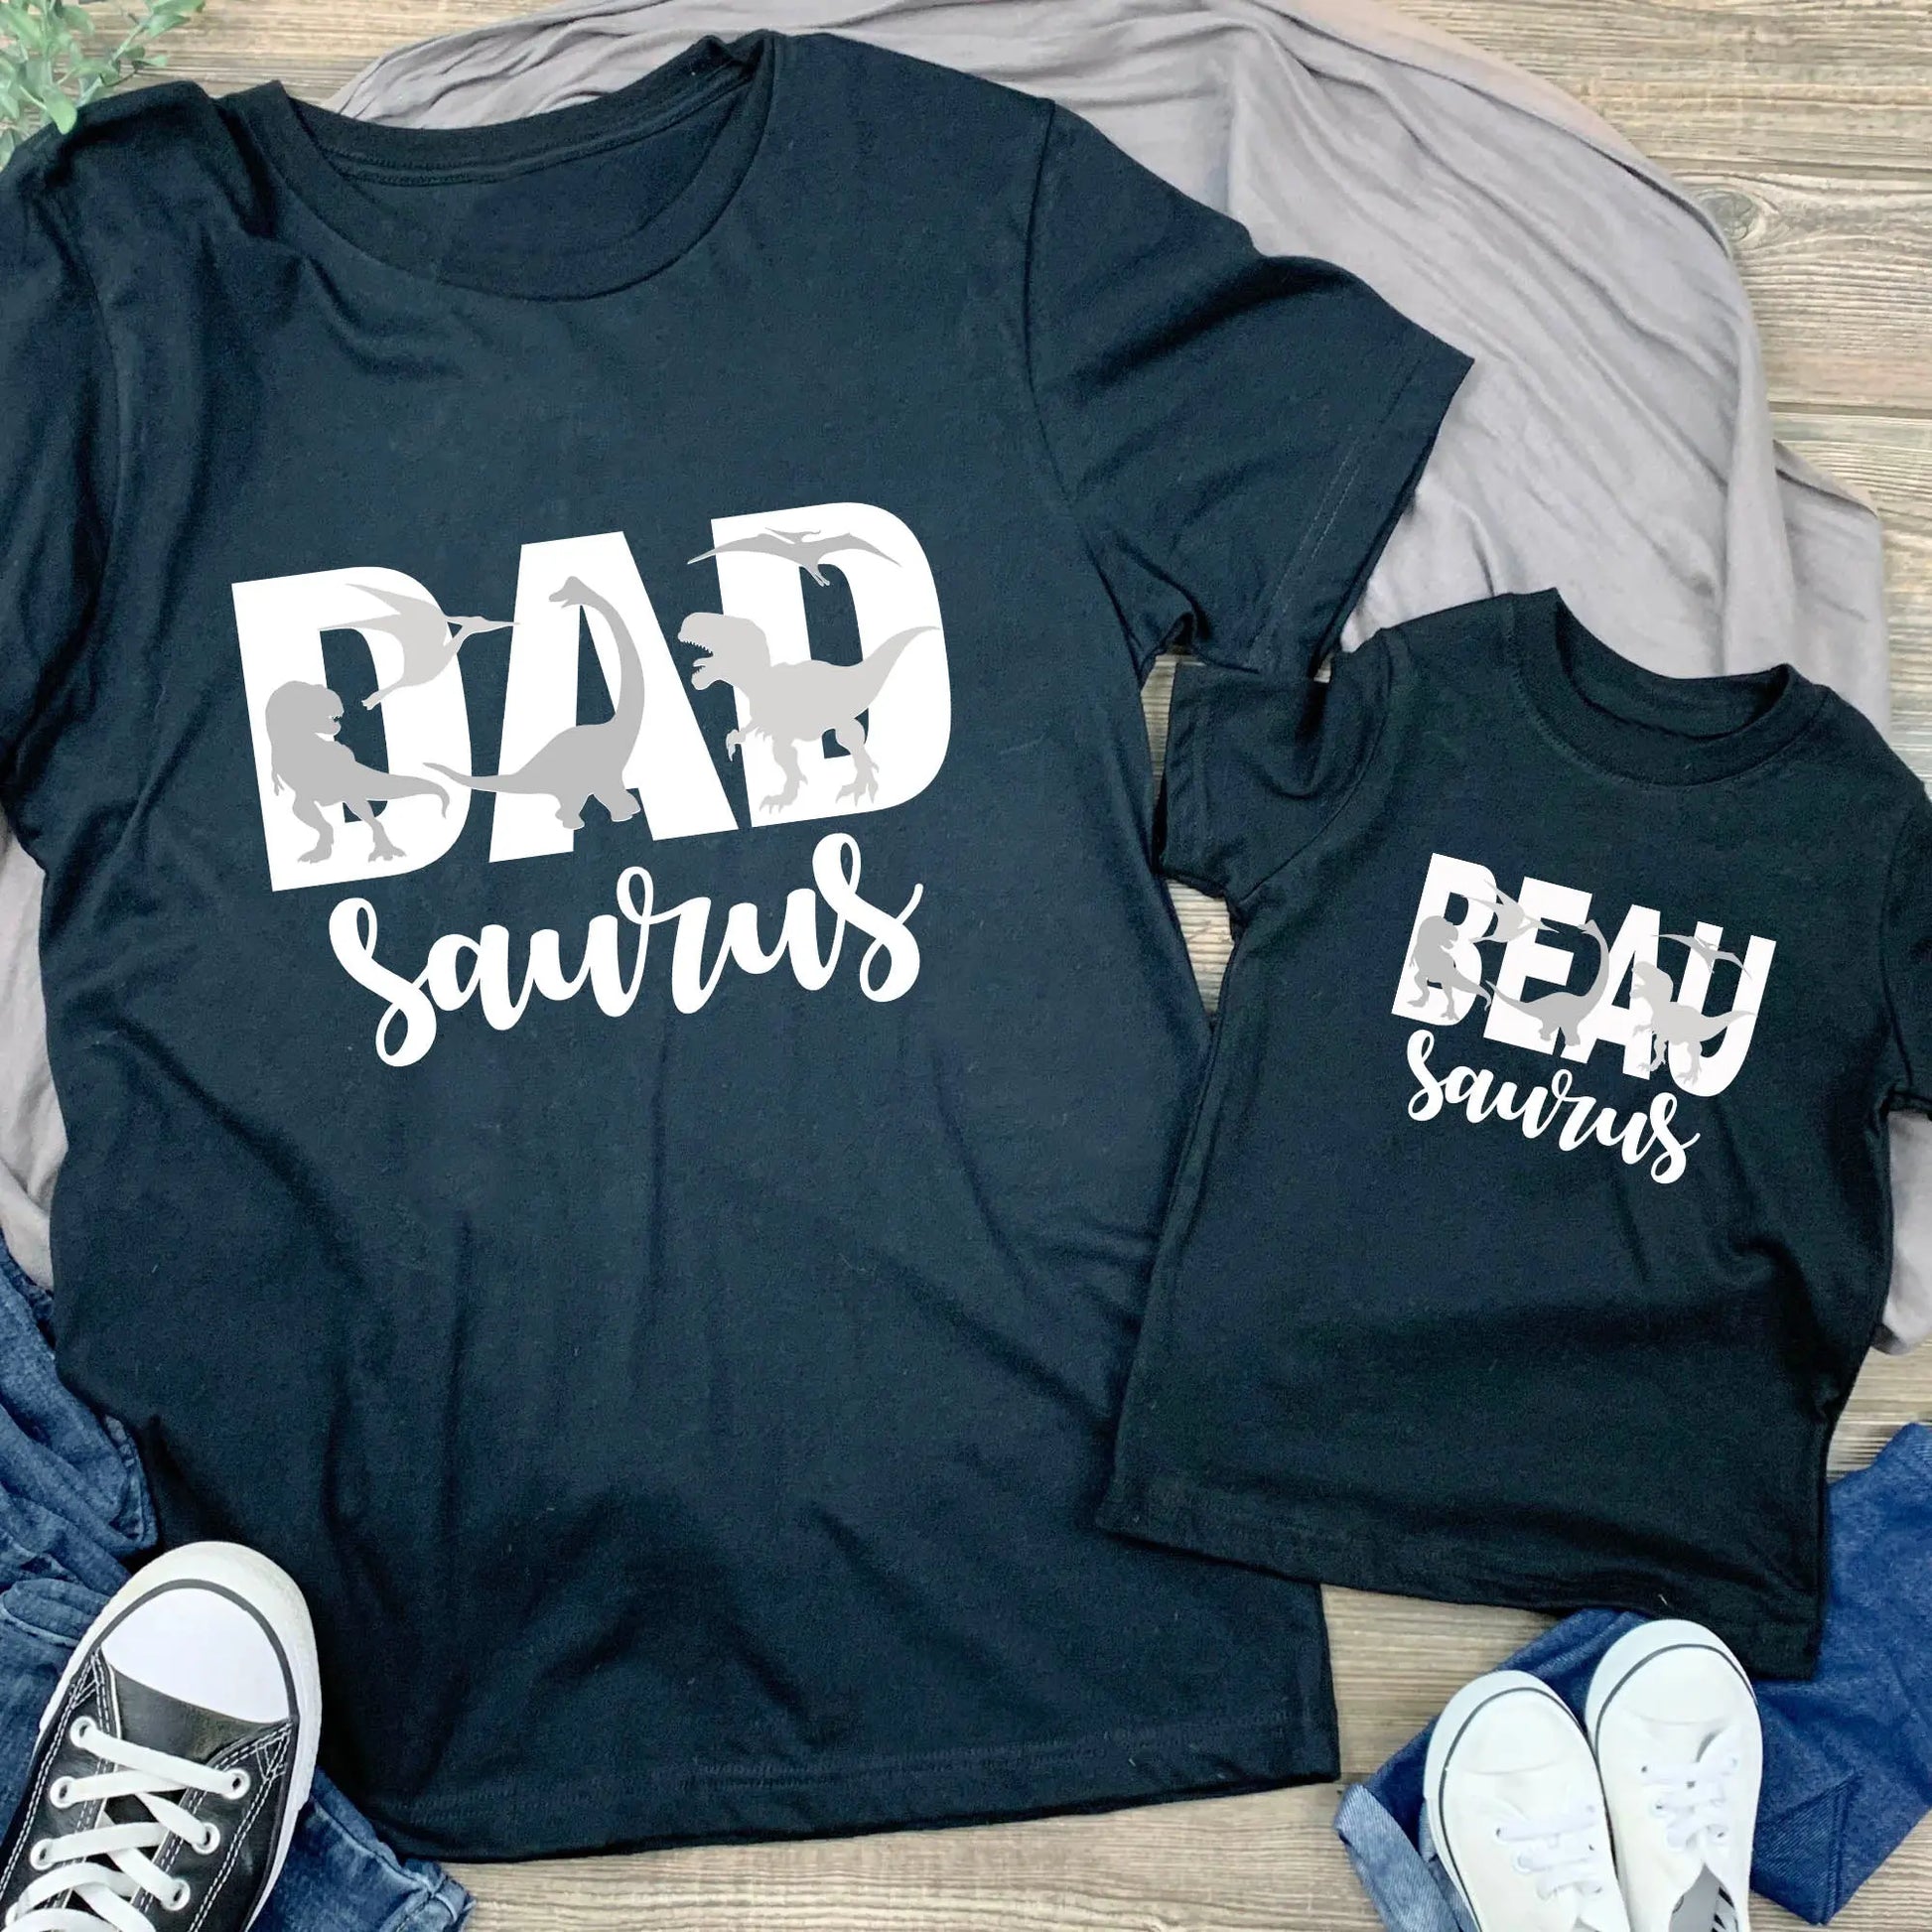 Dadsaurus Unisex t-shirt, Father's Day Shirt, Matching Dad Shirt Amazing Faith Designs